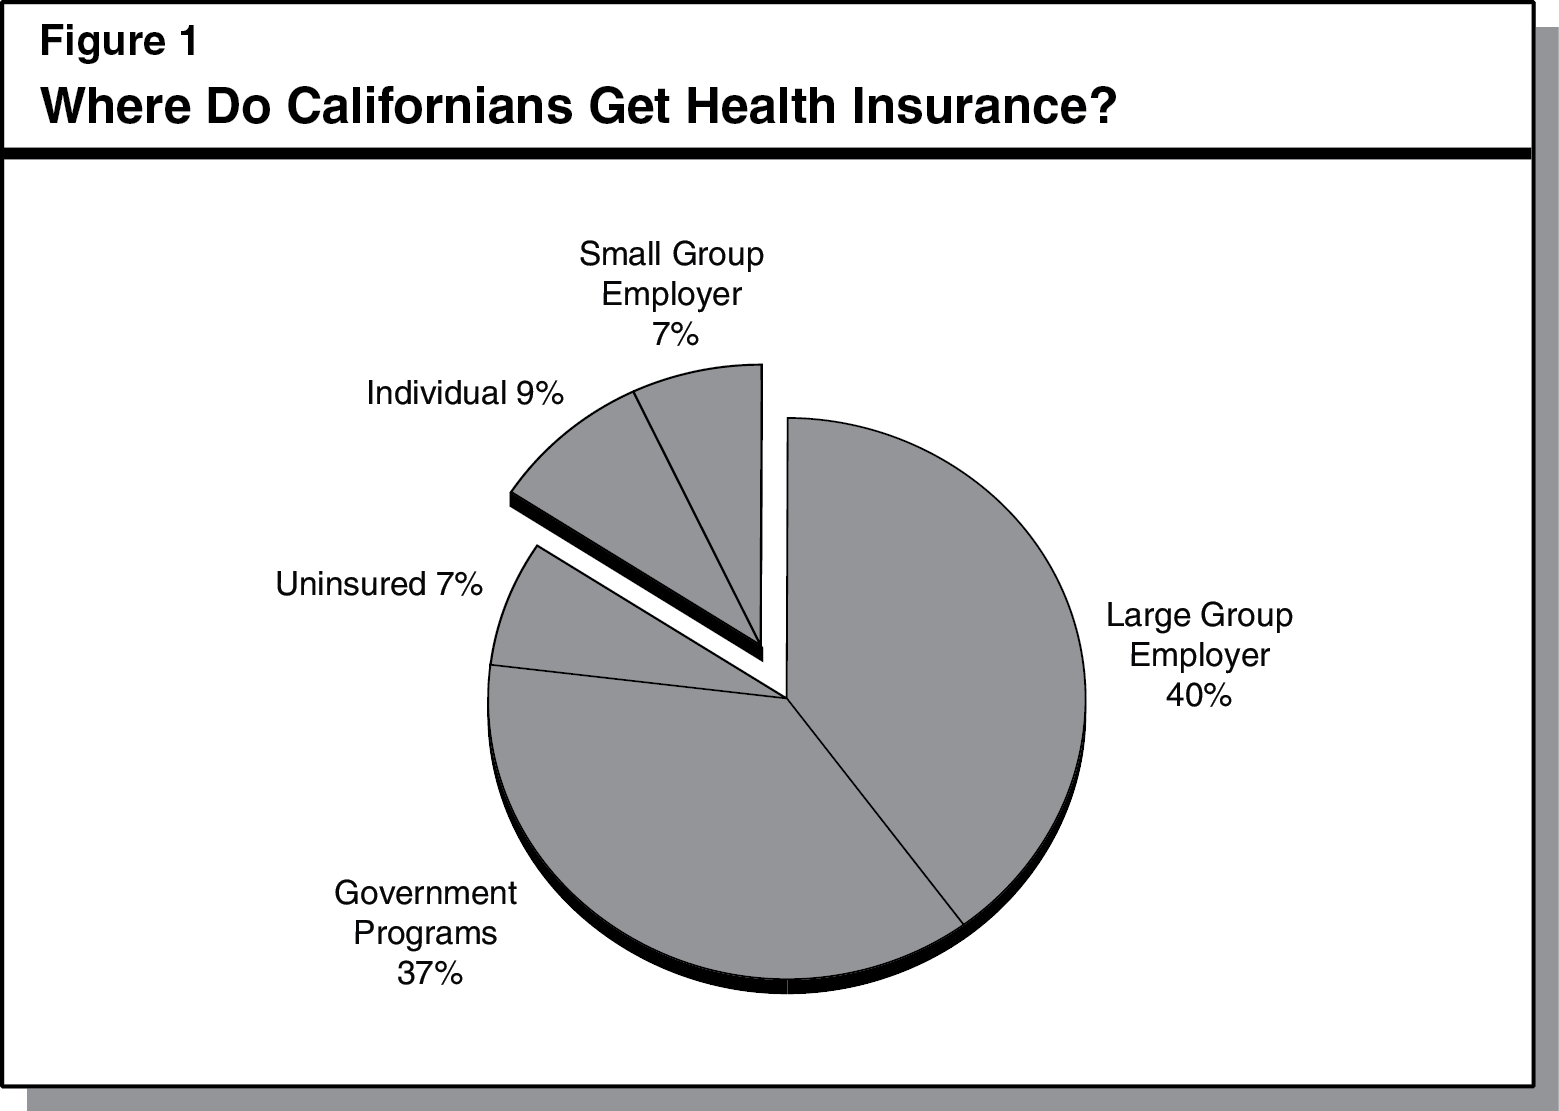 Where Do Californians Get Health Insurance?